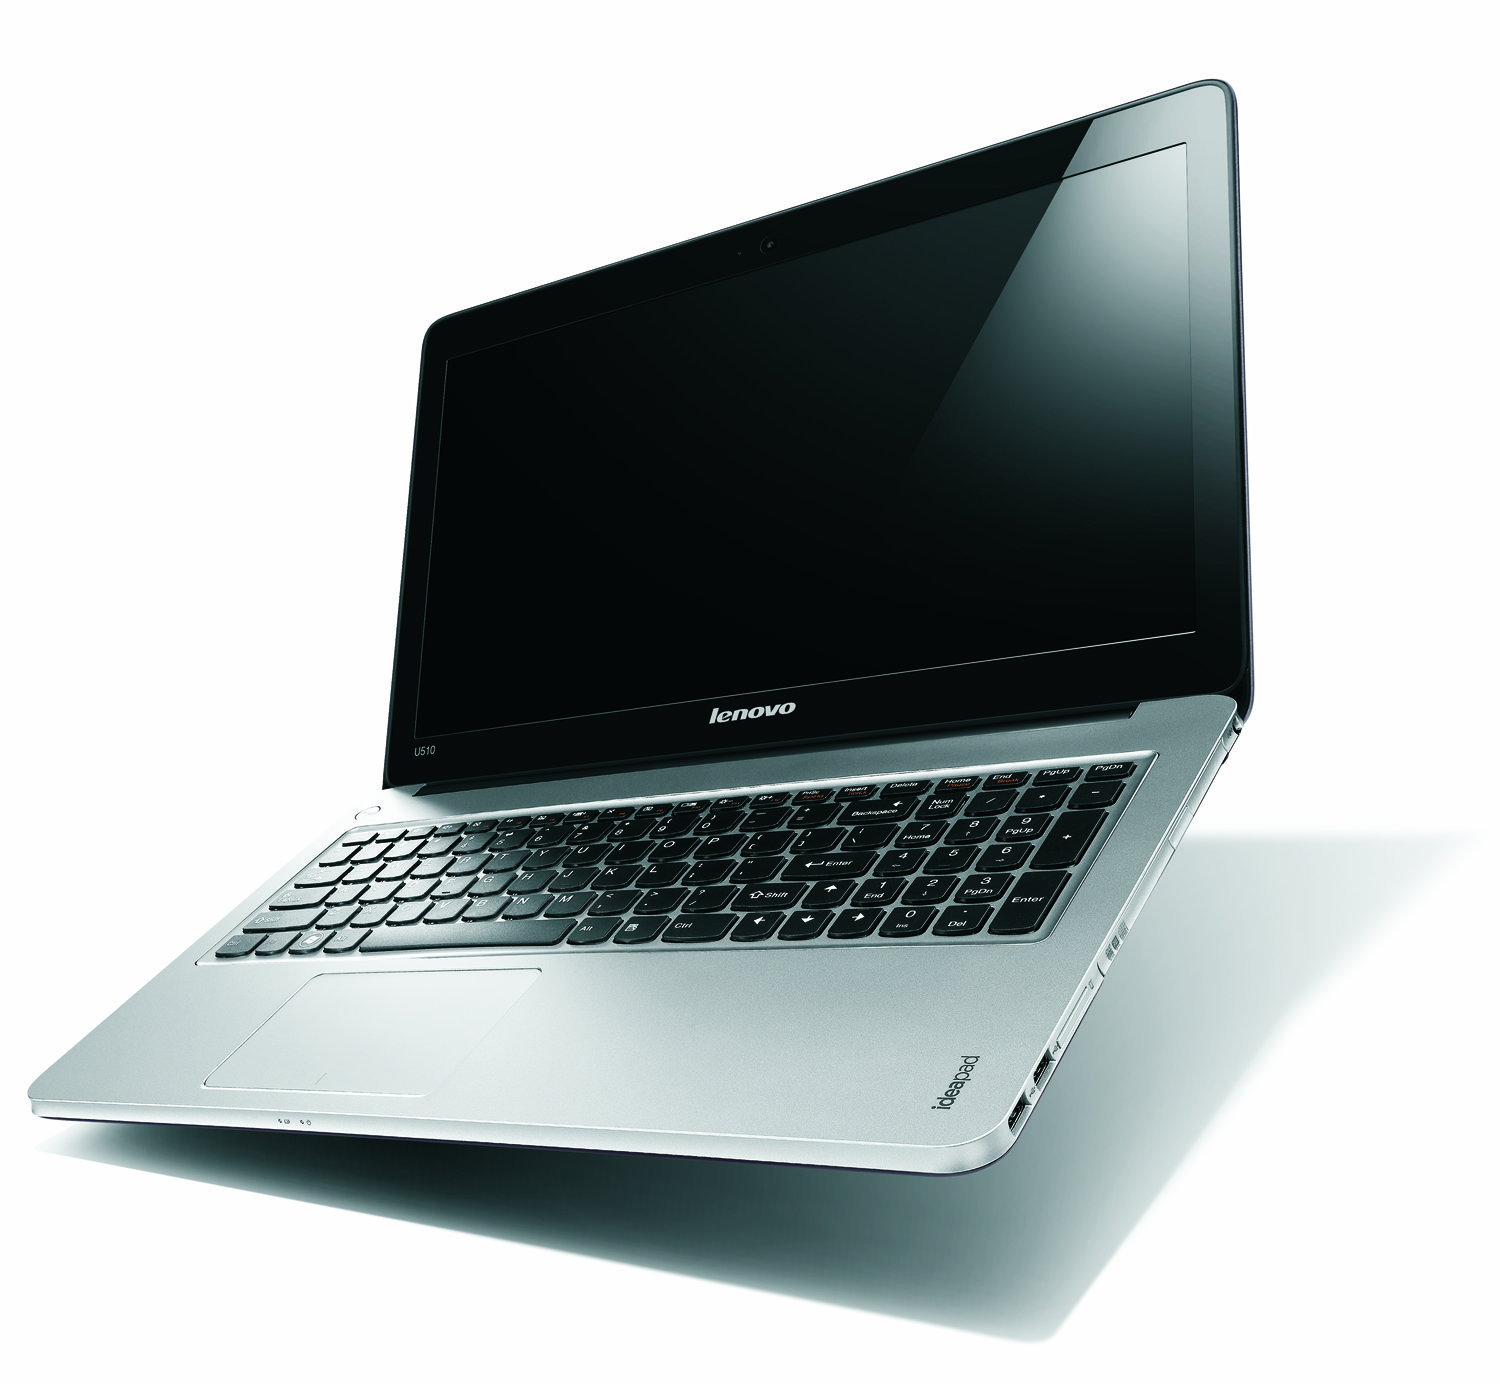 Harga Laptop Lenovo Core i7 Terbaru